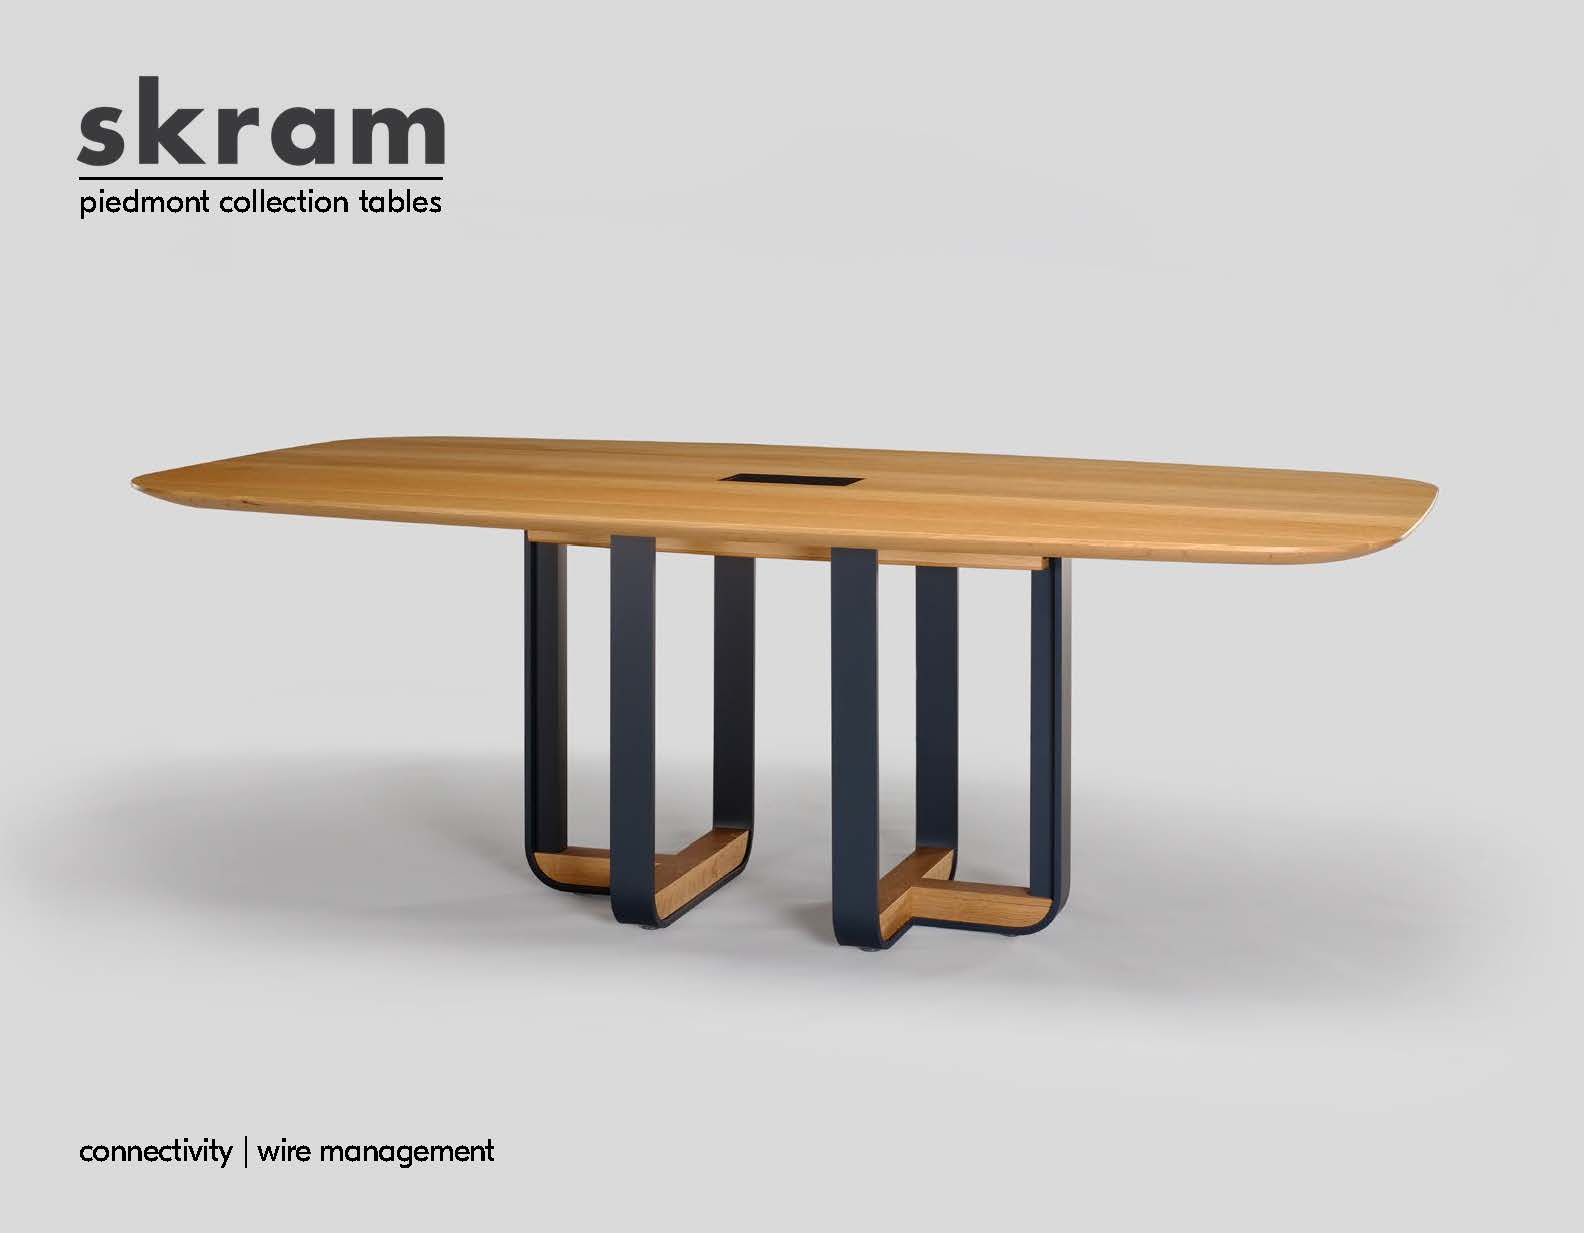 skram_Piedmont Collection Tables Catalog Cover